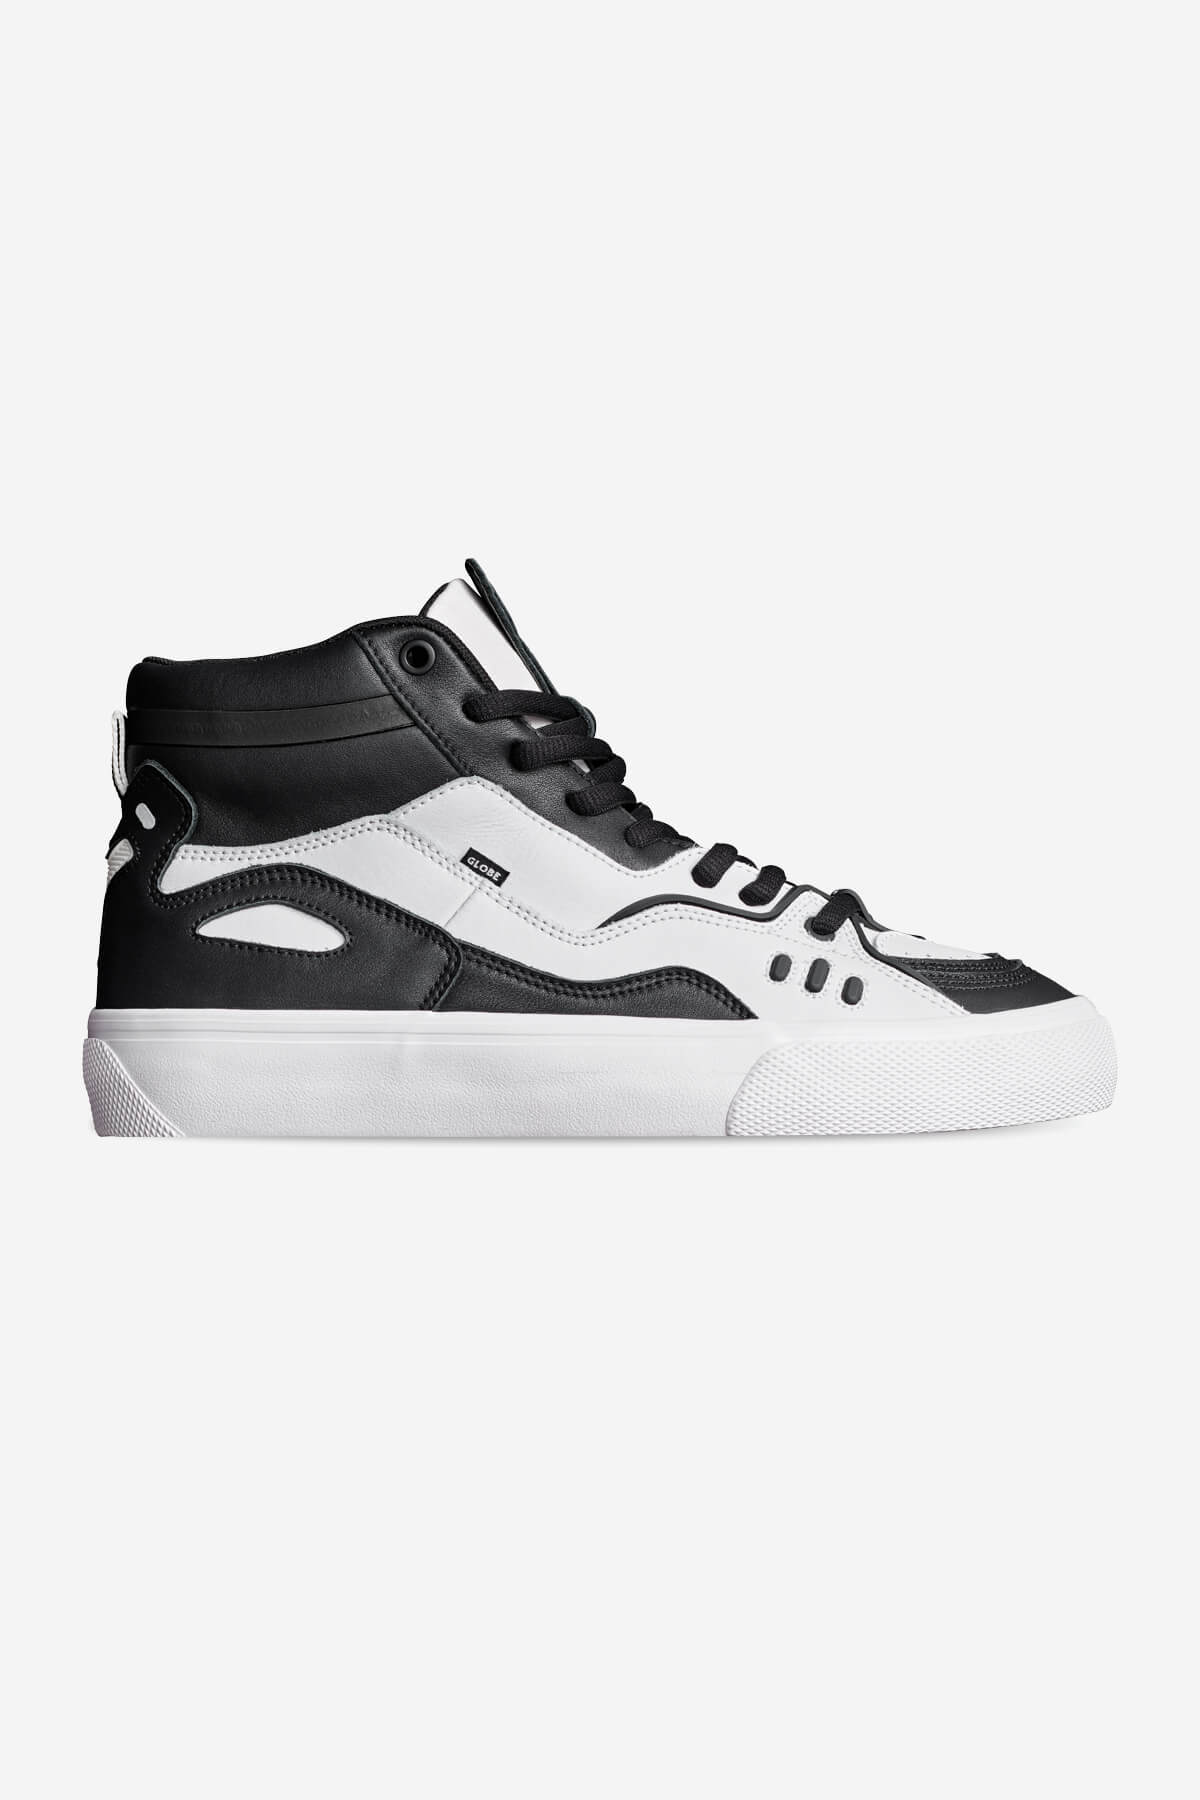 Globe - Dimension - Black/White - Skate Shoes